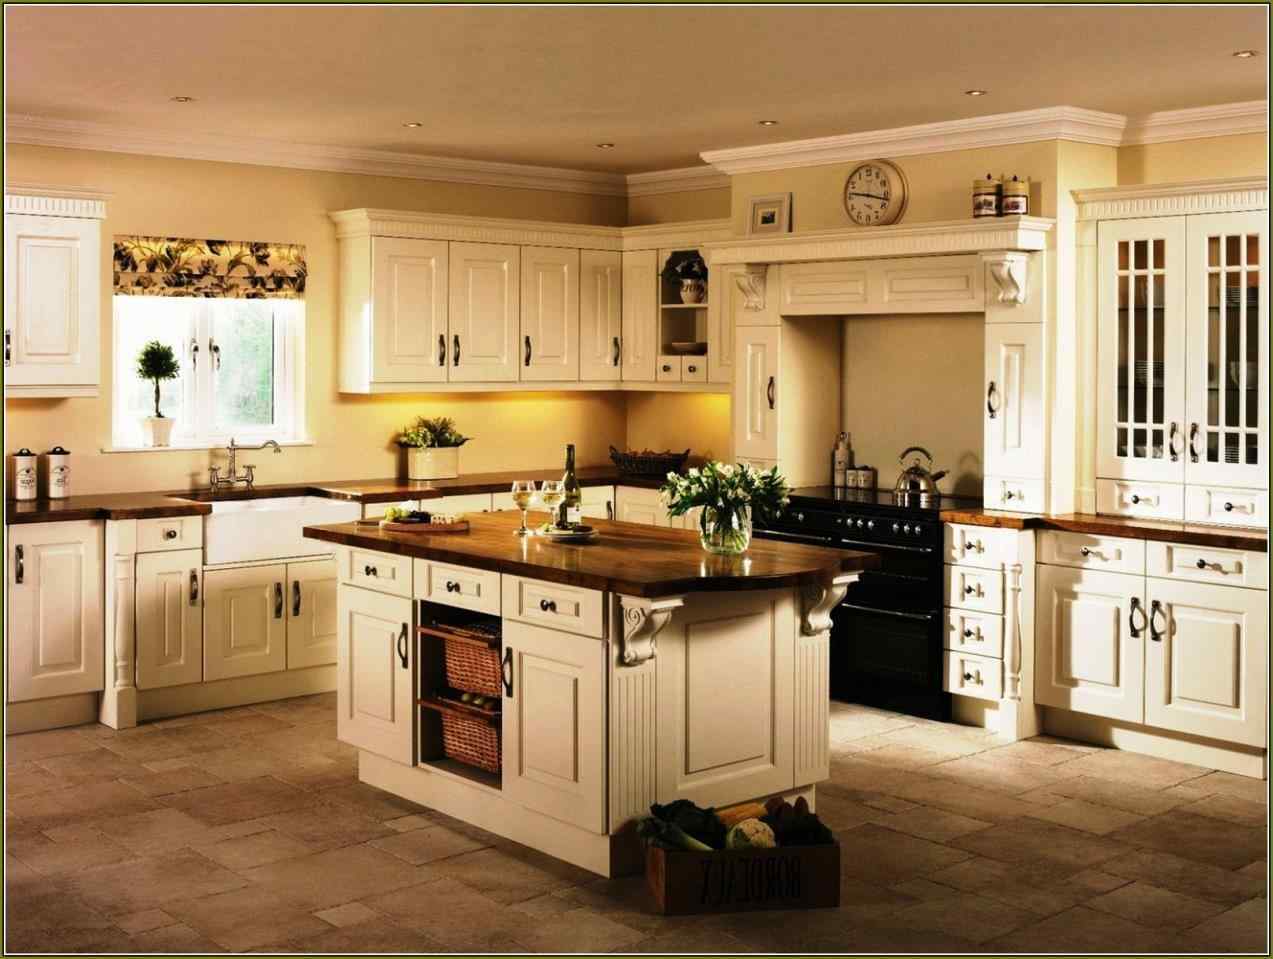 Nice open kitchen cabinet